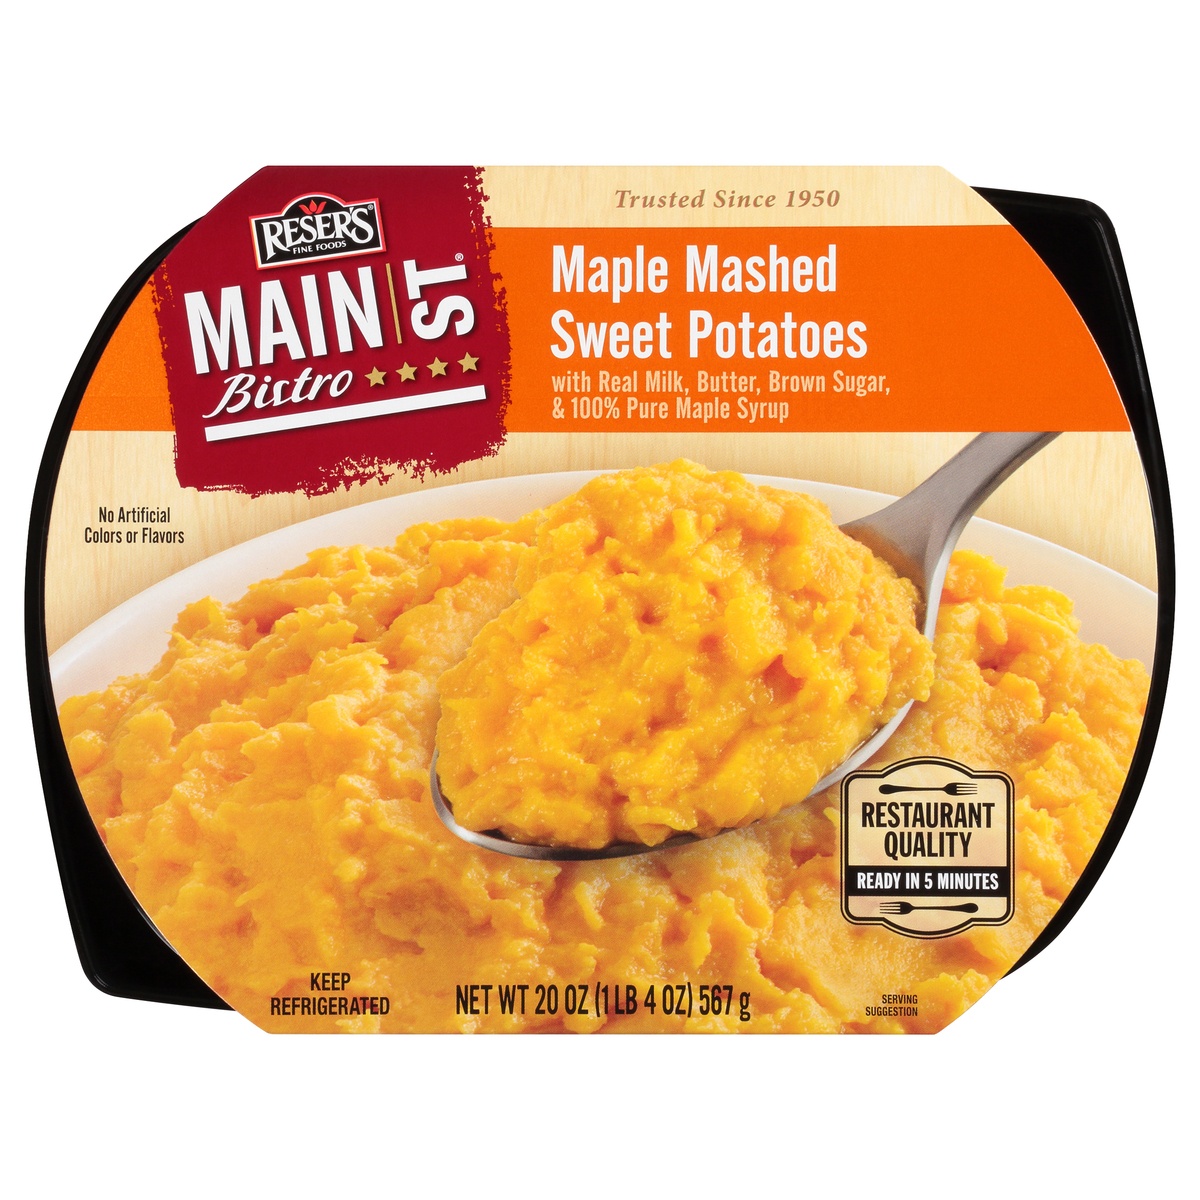 Main St. Bistro Maple Mashed Sweet Potatoes 20 oz | Shipt